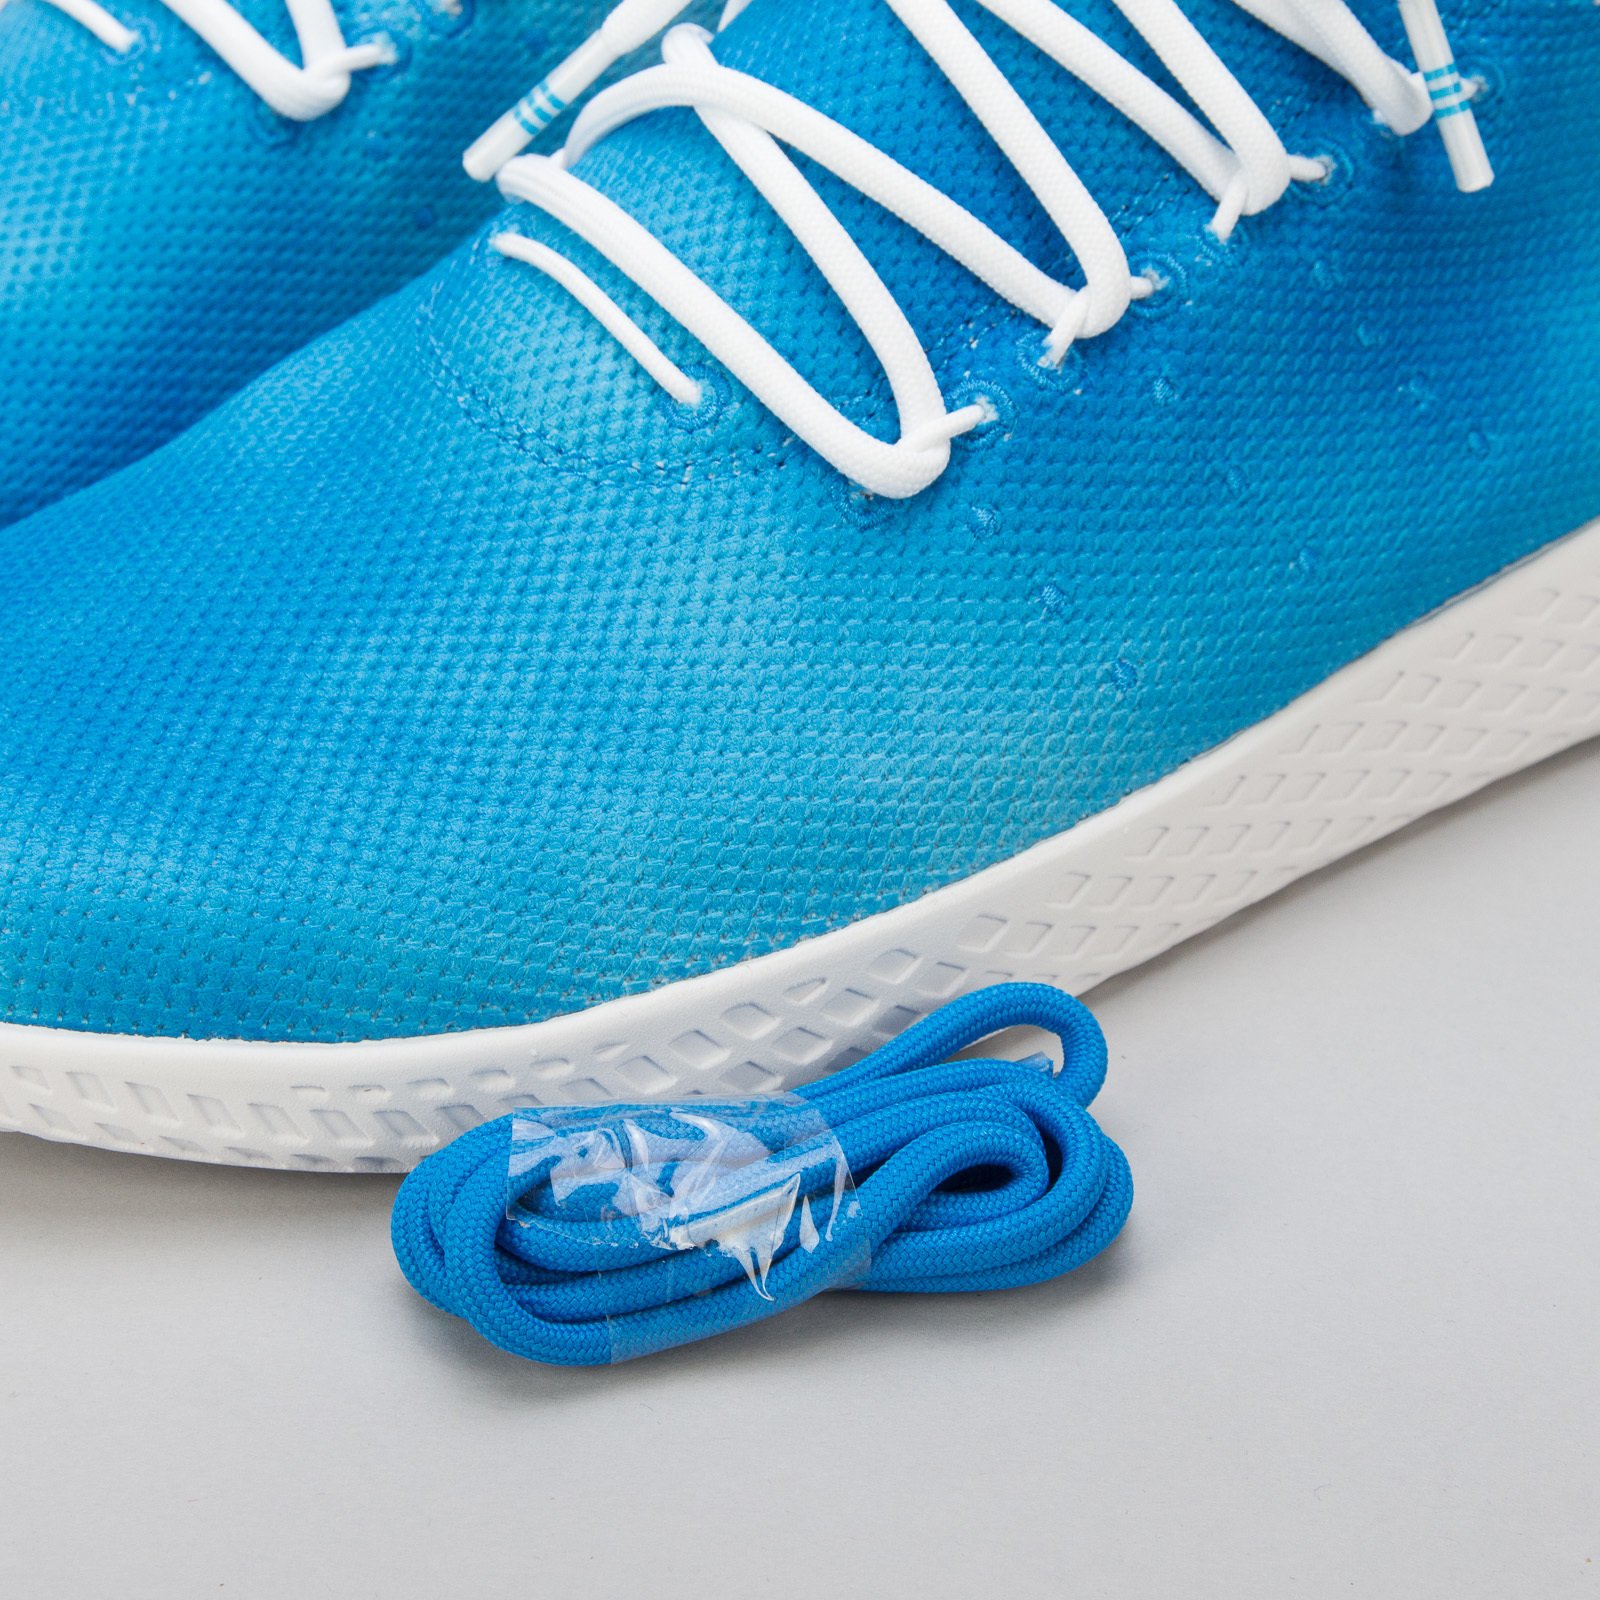 Adidas Pharrell Williams HU Holi Tennis Shoes, Blue/White, Men's 9